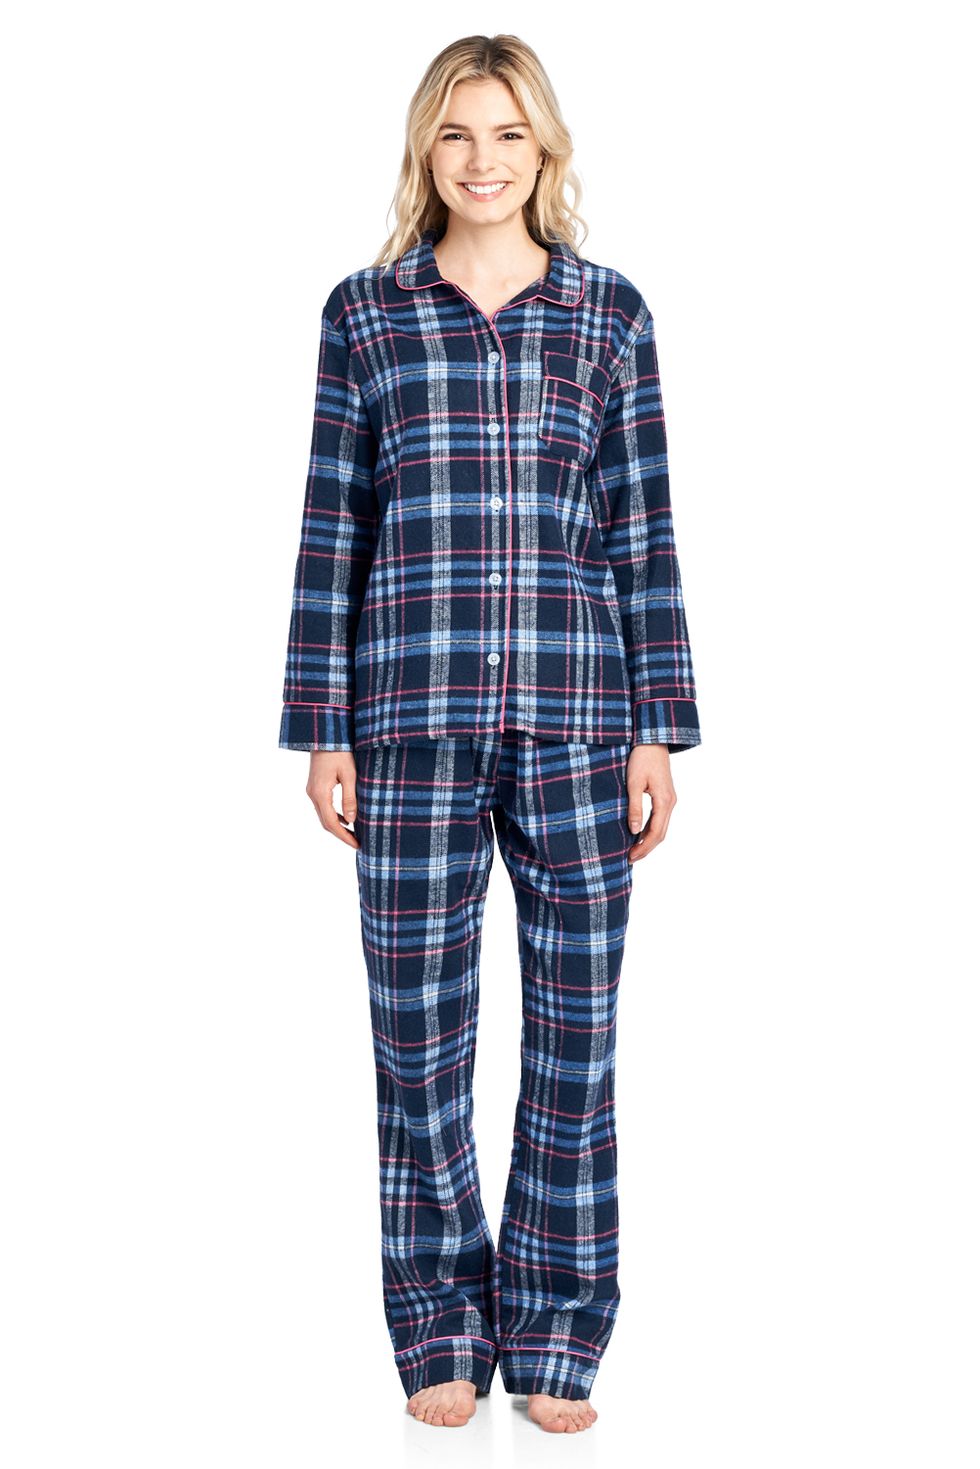 Buy TOP-MAX Womens Pajamas Sets Comfy Cute Cartoon Long Sleeve Sleepwear  Nightwear Soft Pjs Lounge Sets S-XXL, Color-2 Pink, XX-Large at